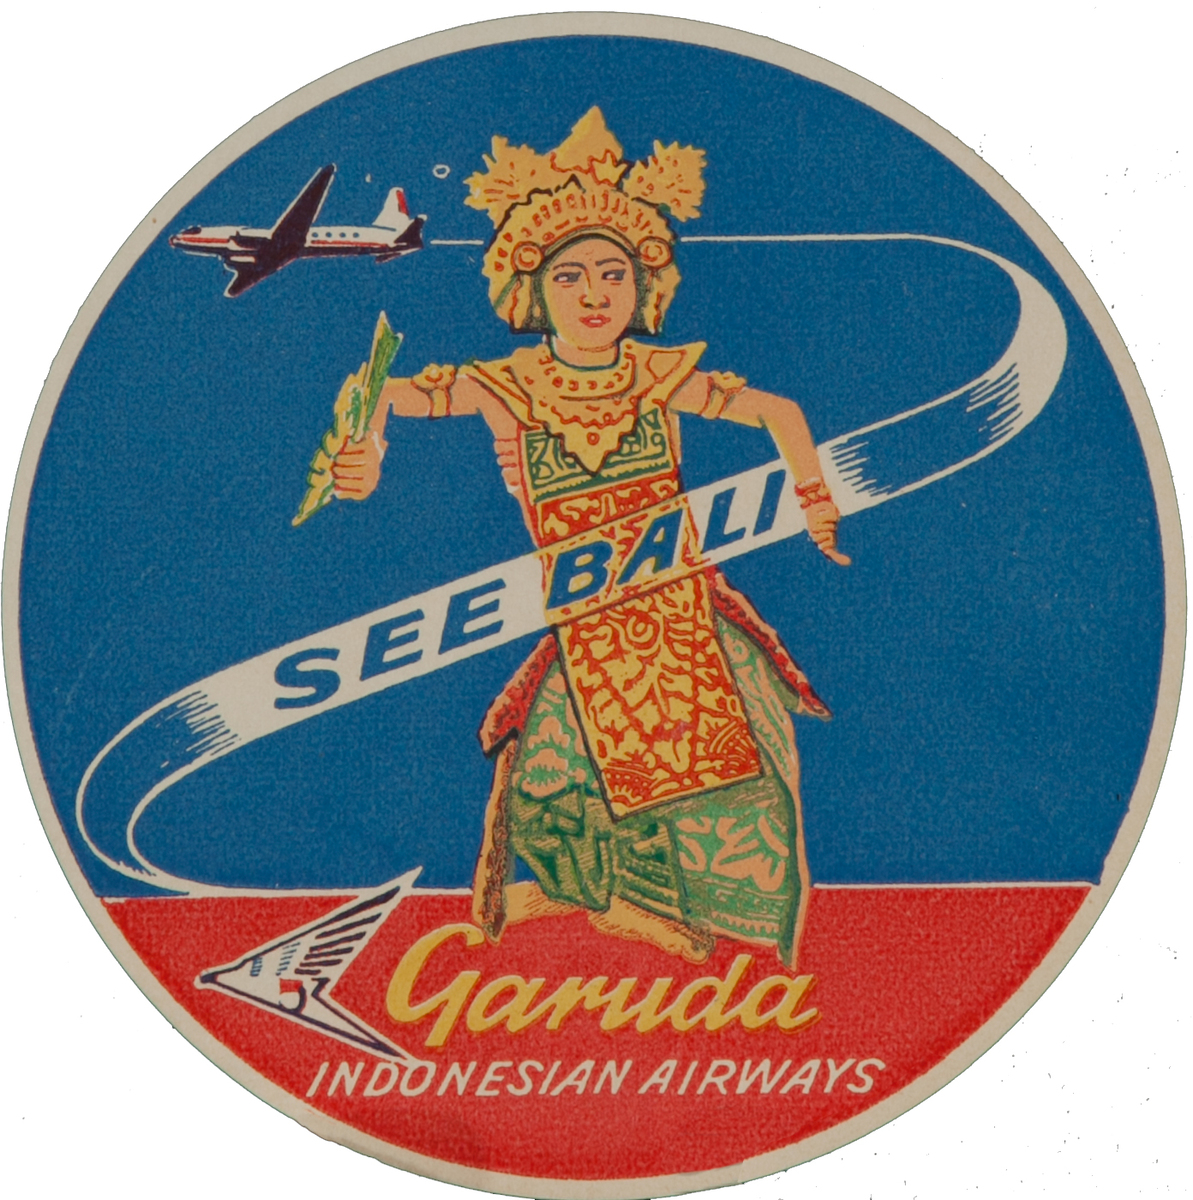 See Bali, Garuda Indonesian Airways Luggage Label